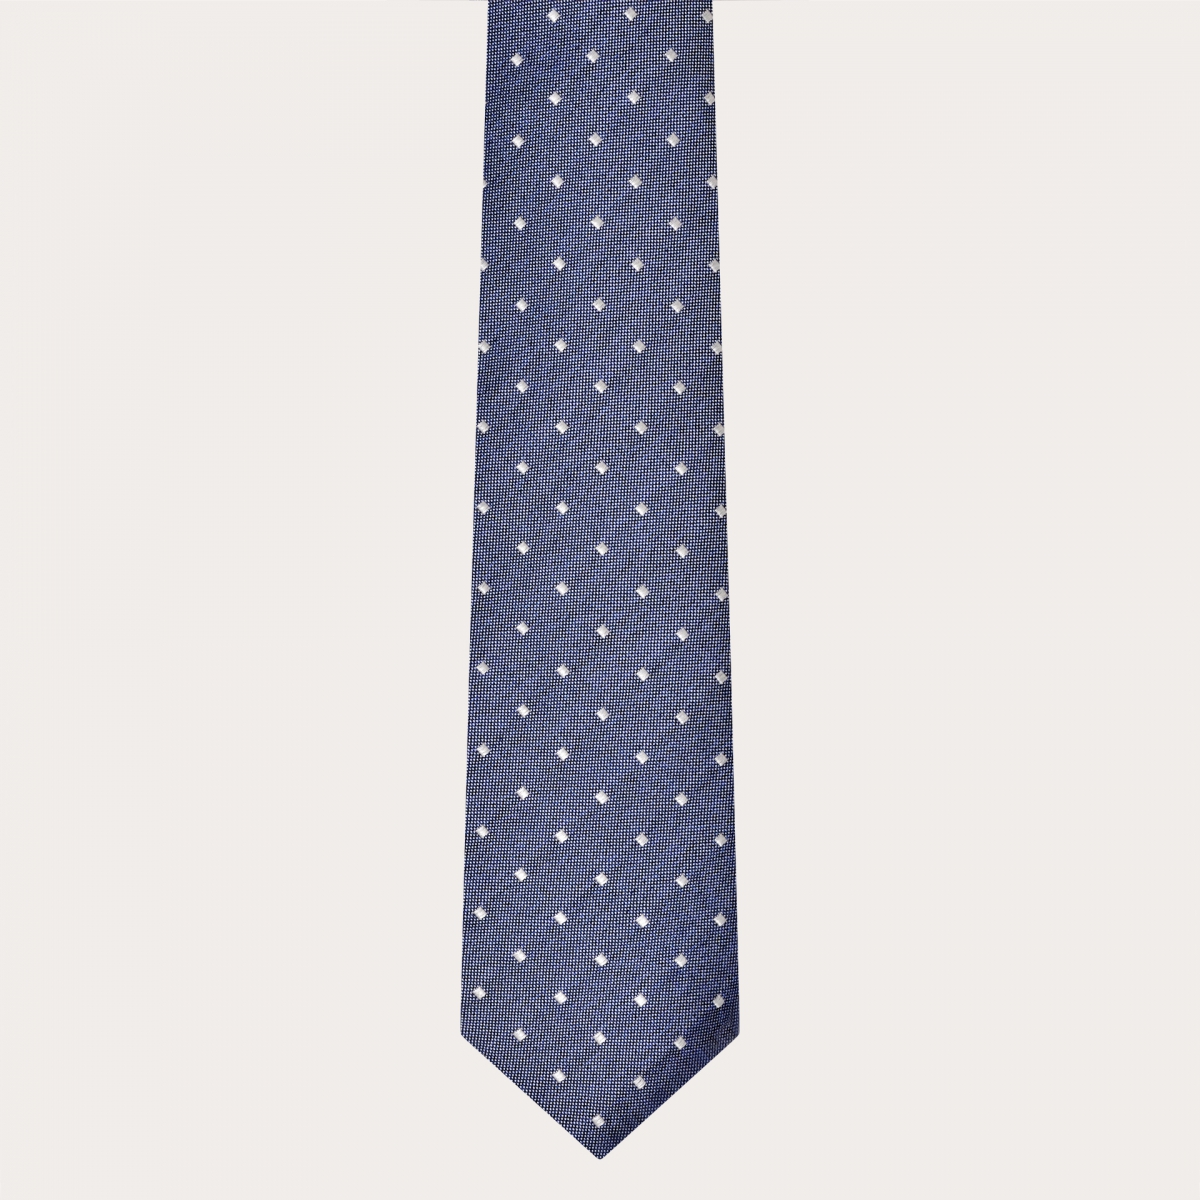 BRUCLE Elegante Krawatte aus Jacquard-Seide, hellblau meliert mit perlmuttfarbenen Karos